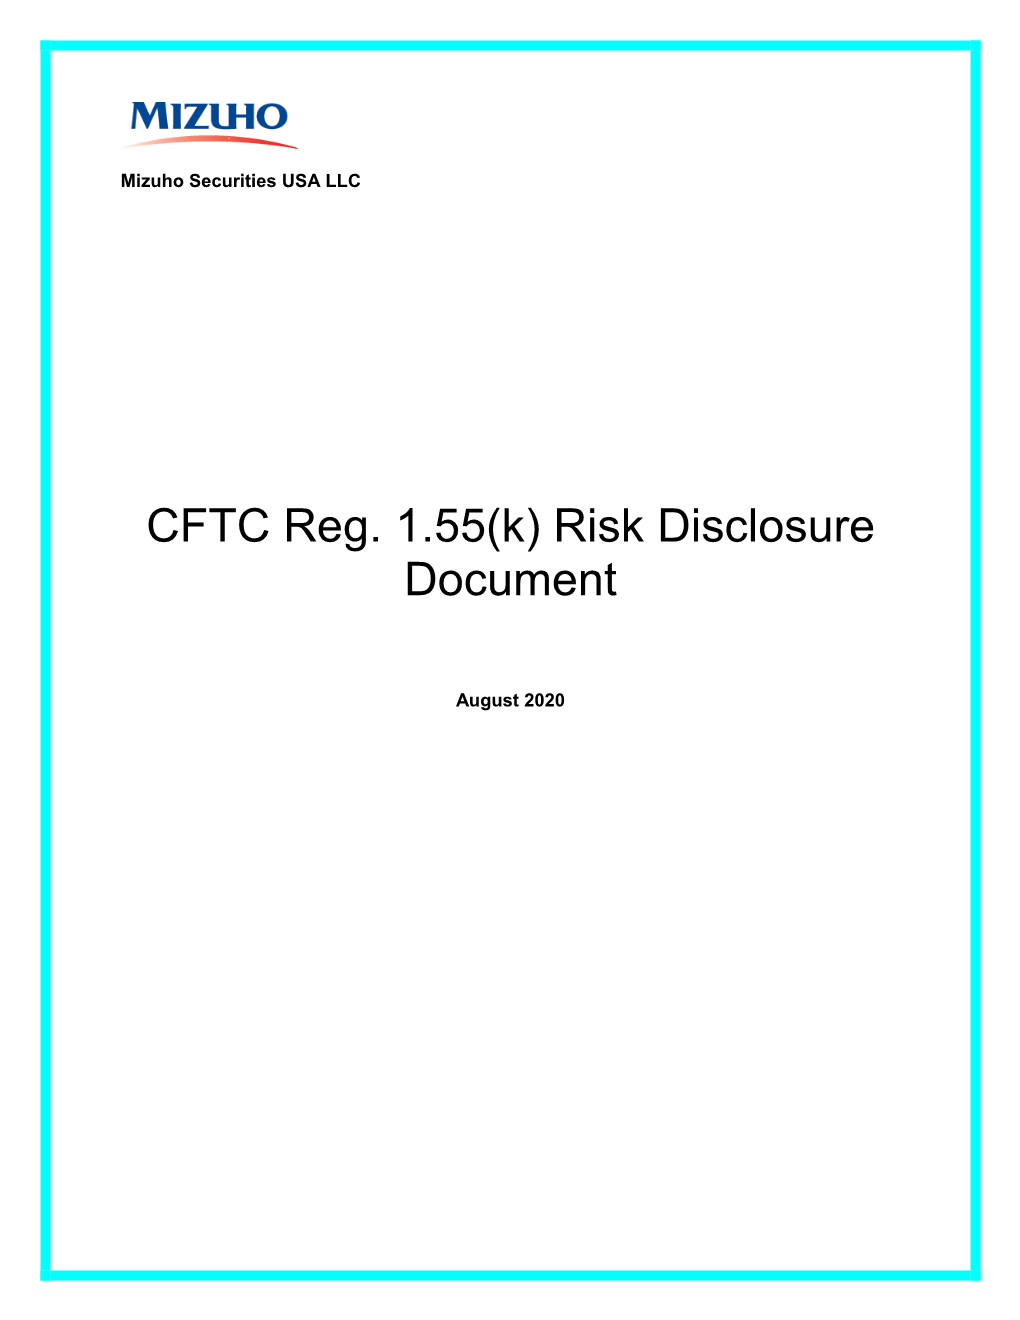 CFTC Reg. 1.55(K) Risk Disclosure Document